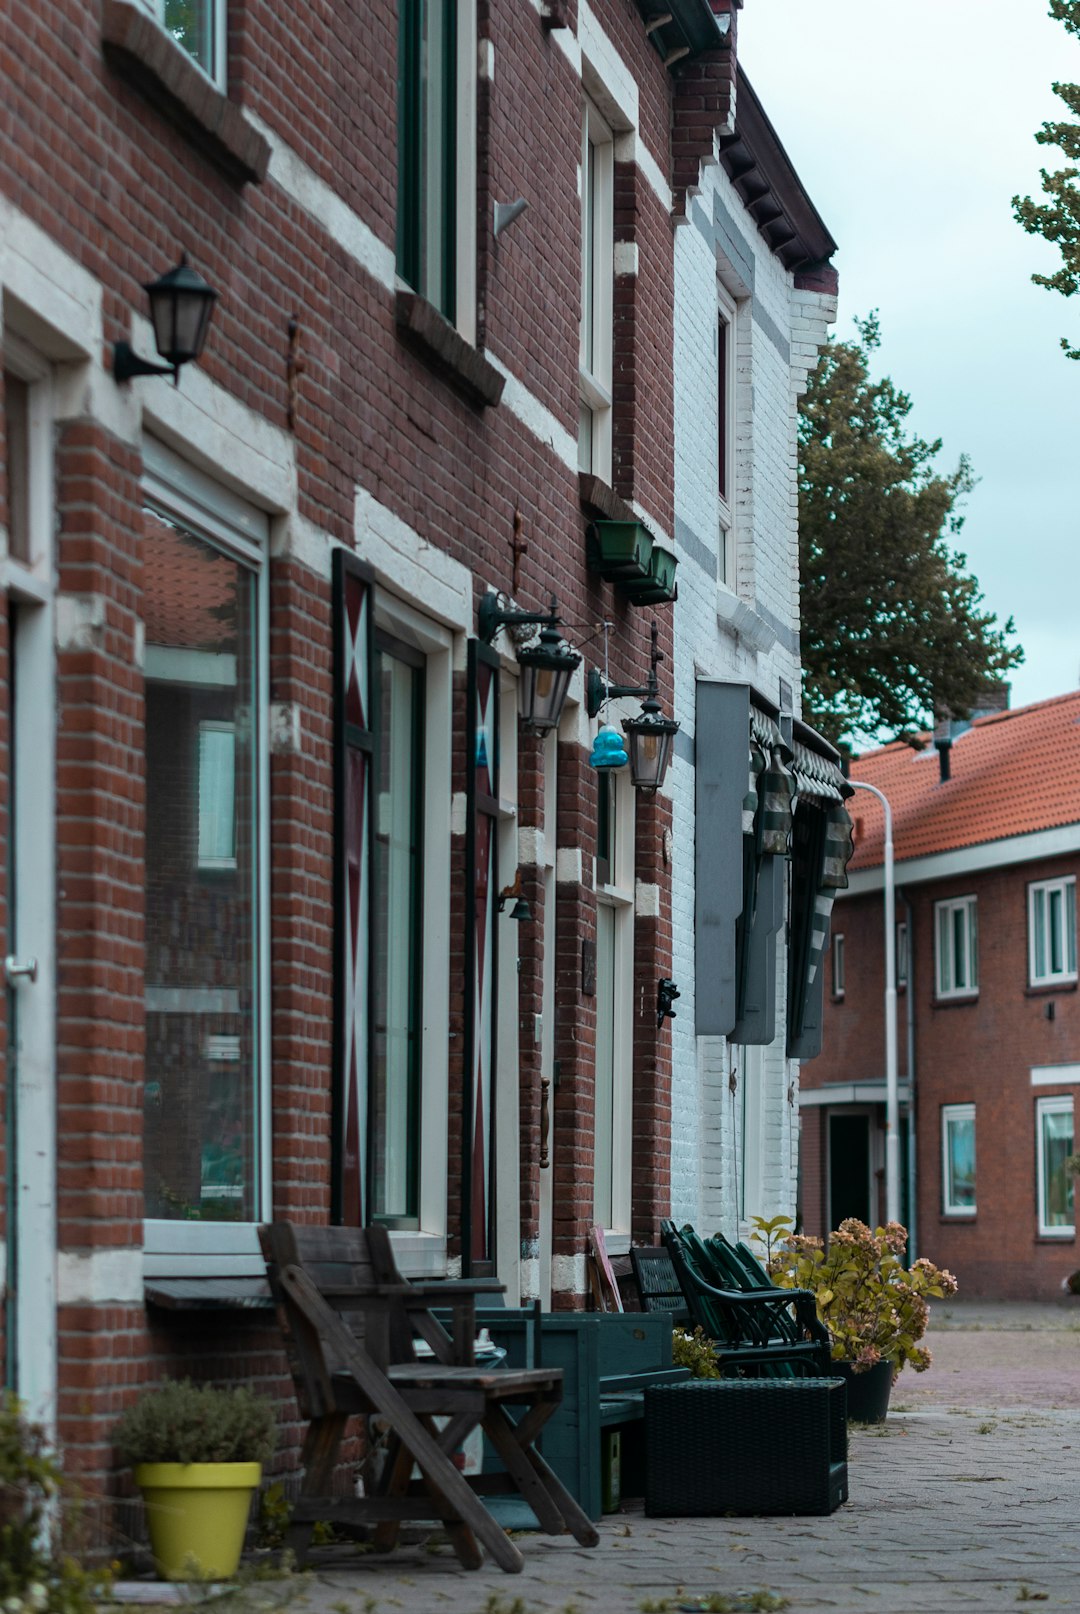 Town photo spot IJmuiden Burcht van Leiden